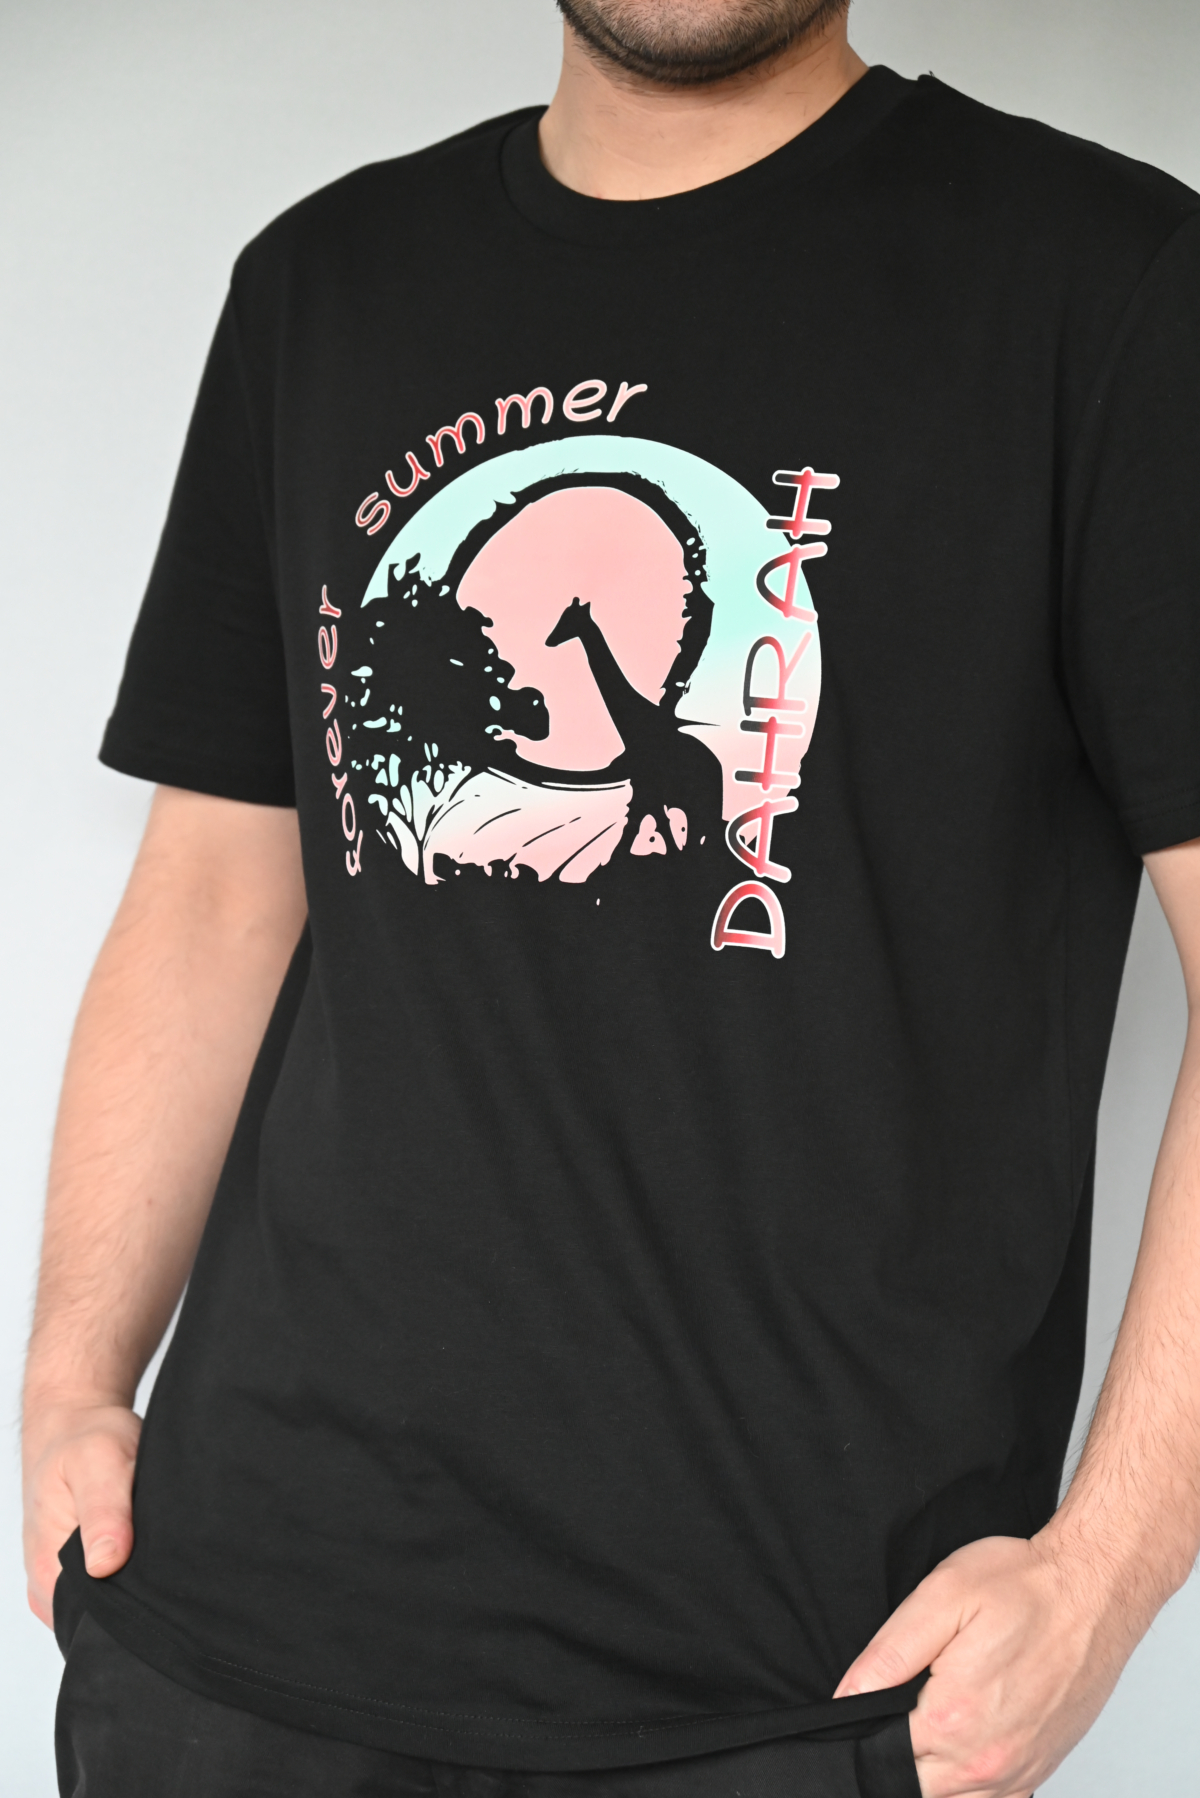 Dahrah Darah unisex organic cotton T-shirt with print of a giraffe with text "forever summer".